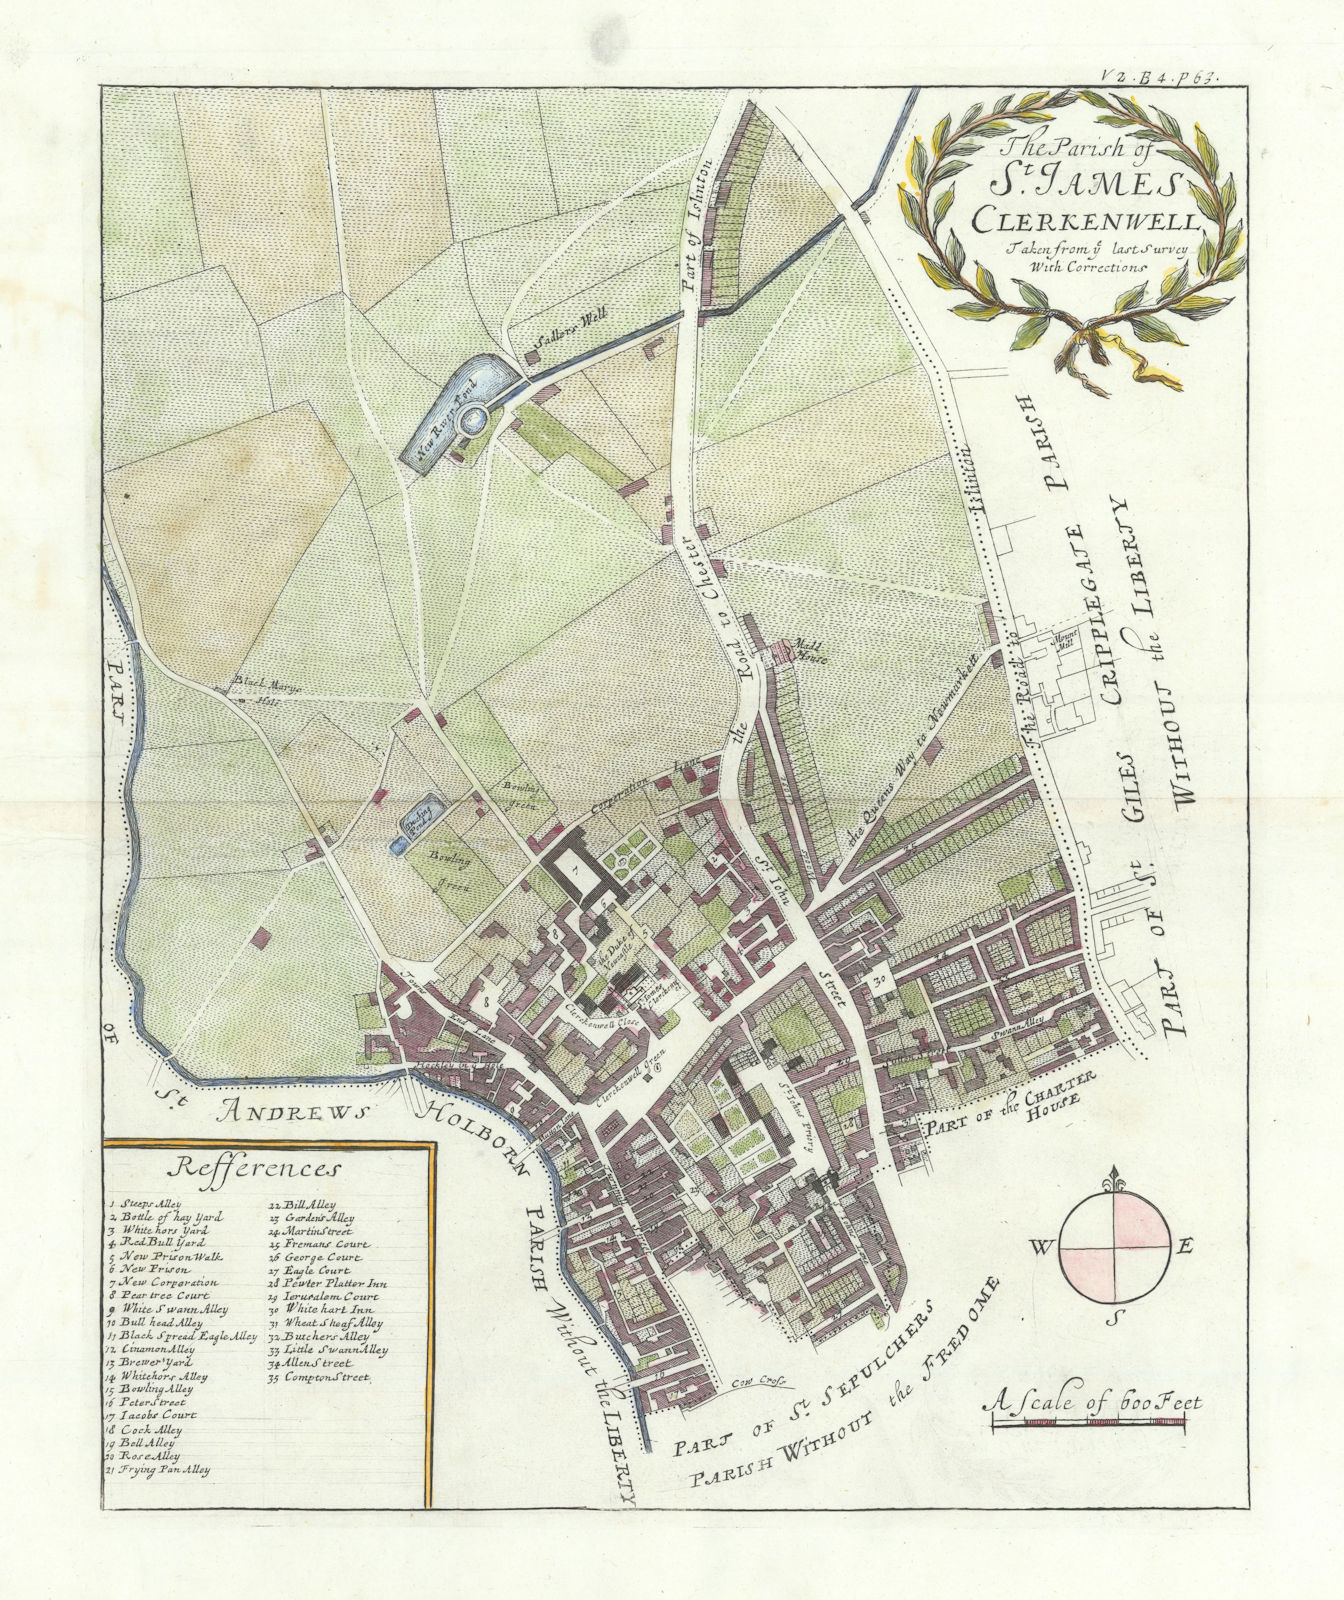 The parish of St James, Clerkenwell. St John Street. Green. STOW/STRYPE 1720 map